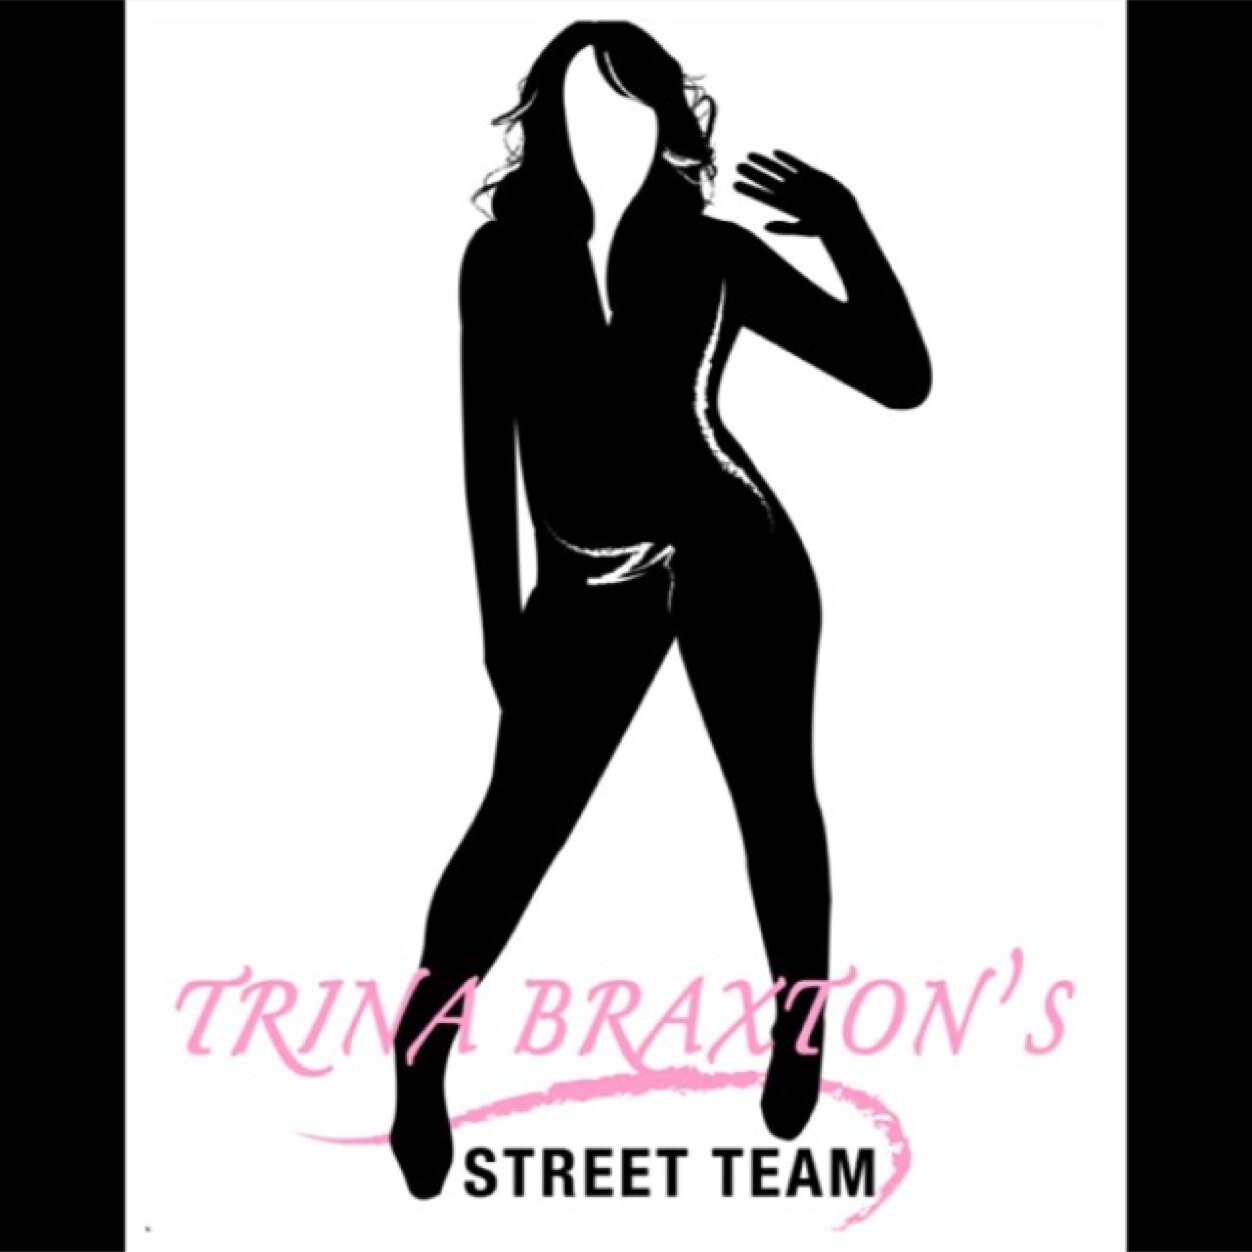 We promote all things Trina Braxton! Follow @TrinaBraxton & her businesses @bar_chix & @TrinaBraxhair